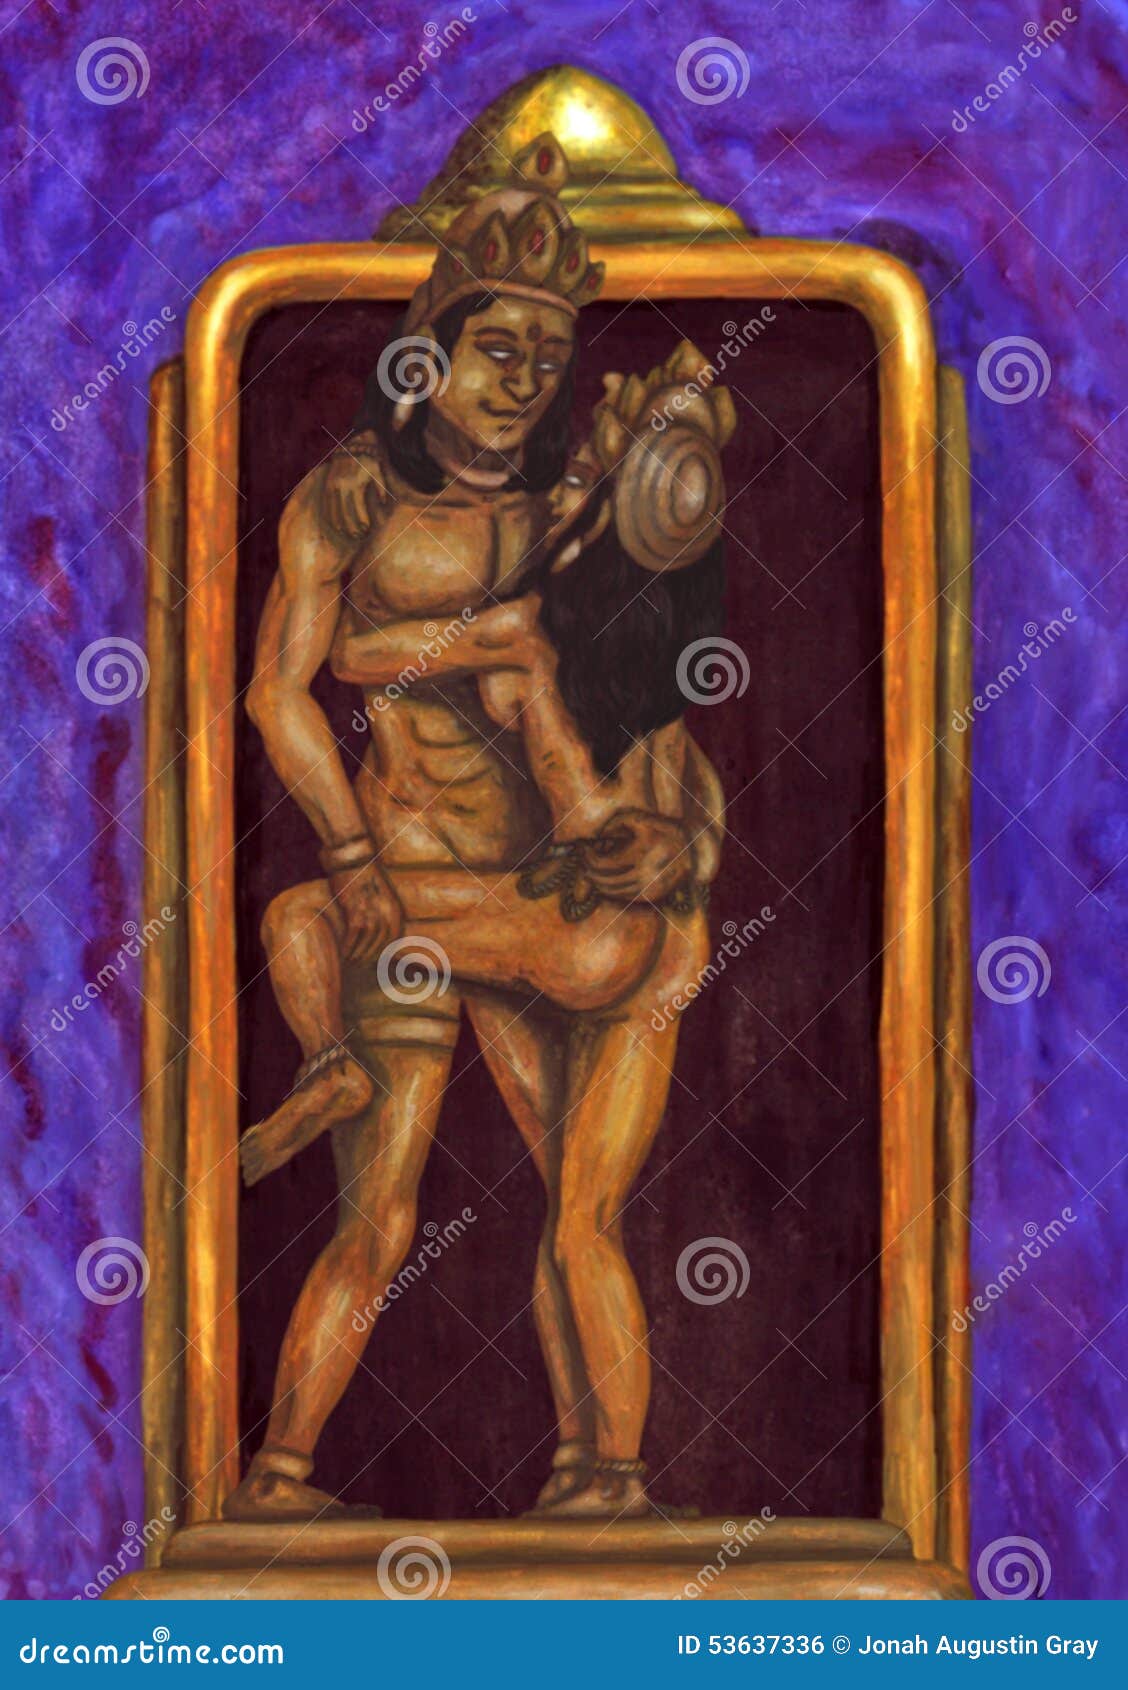 Idol of Sex (2013) stock illustration. Illustration of bizarre - 53637336